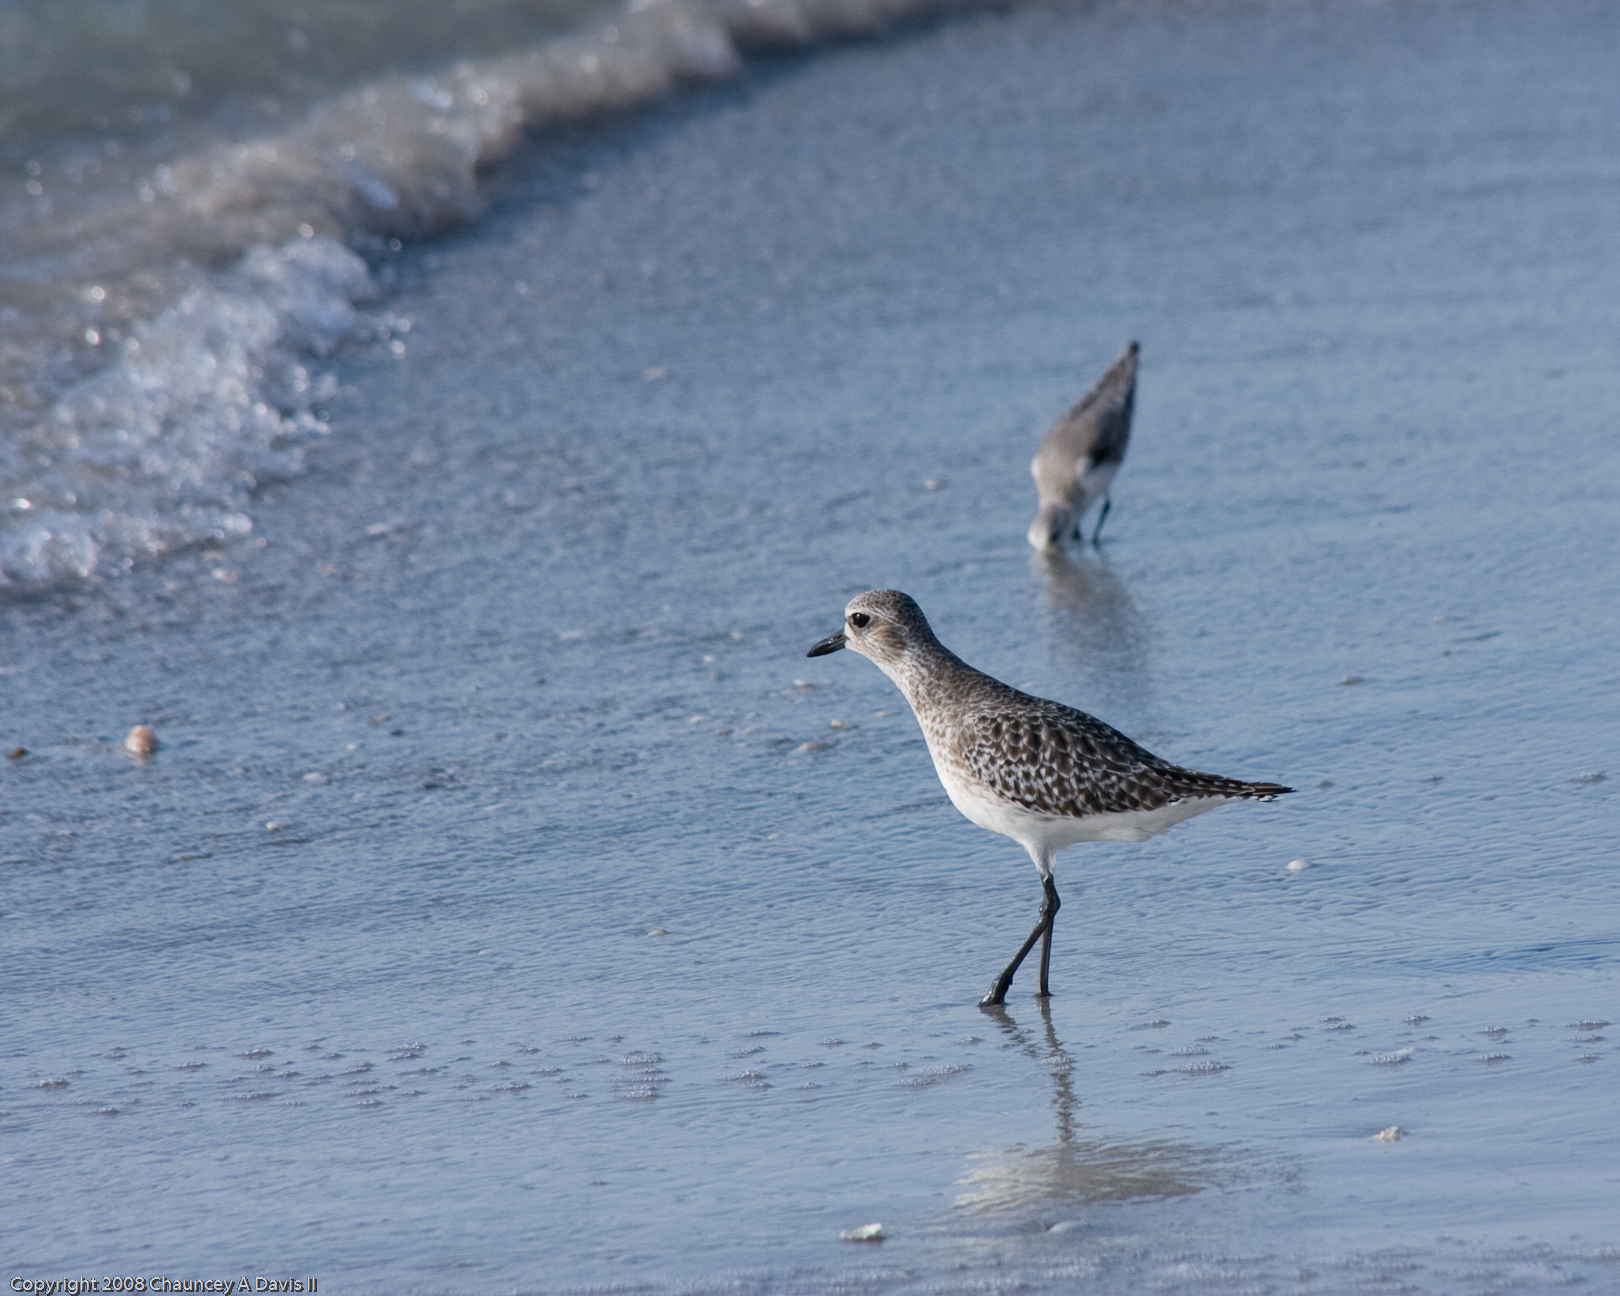 a small bird is walking along the beach